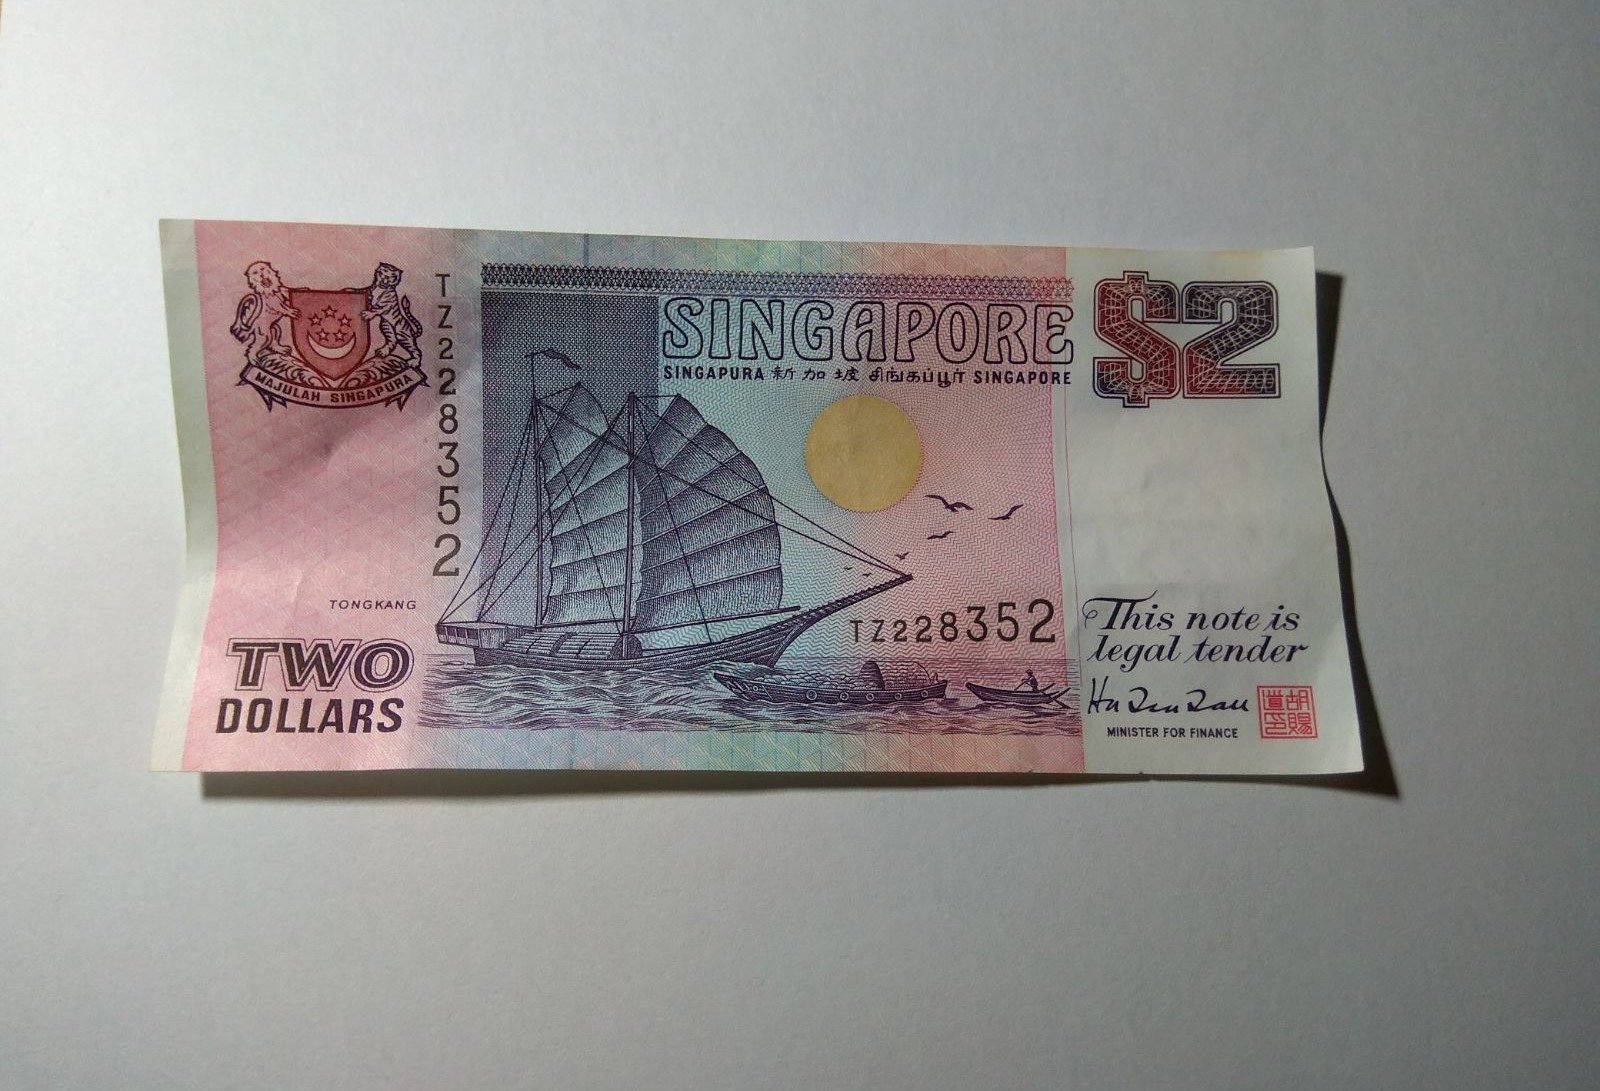 Singapore $2 note